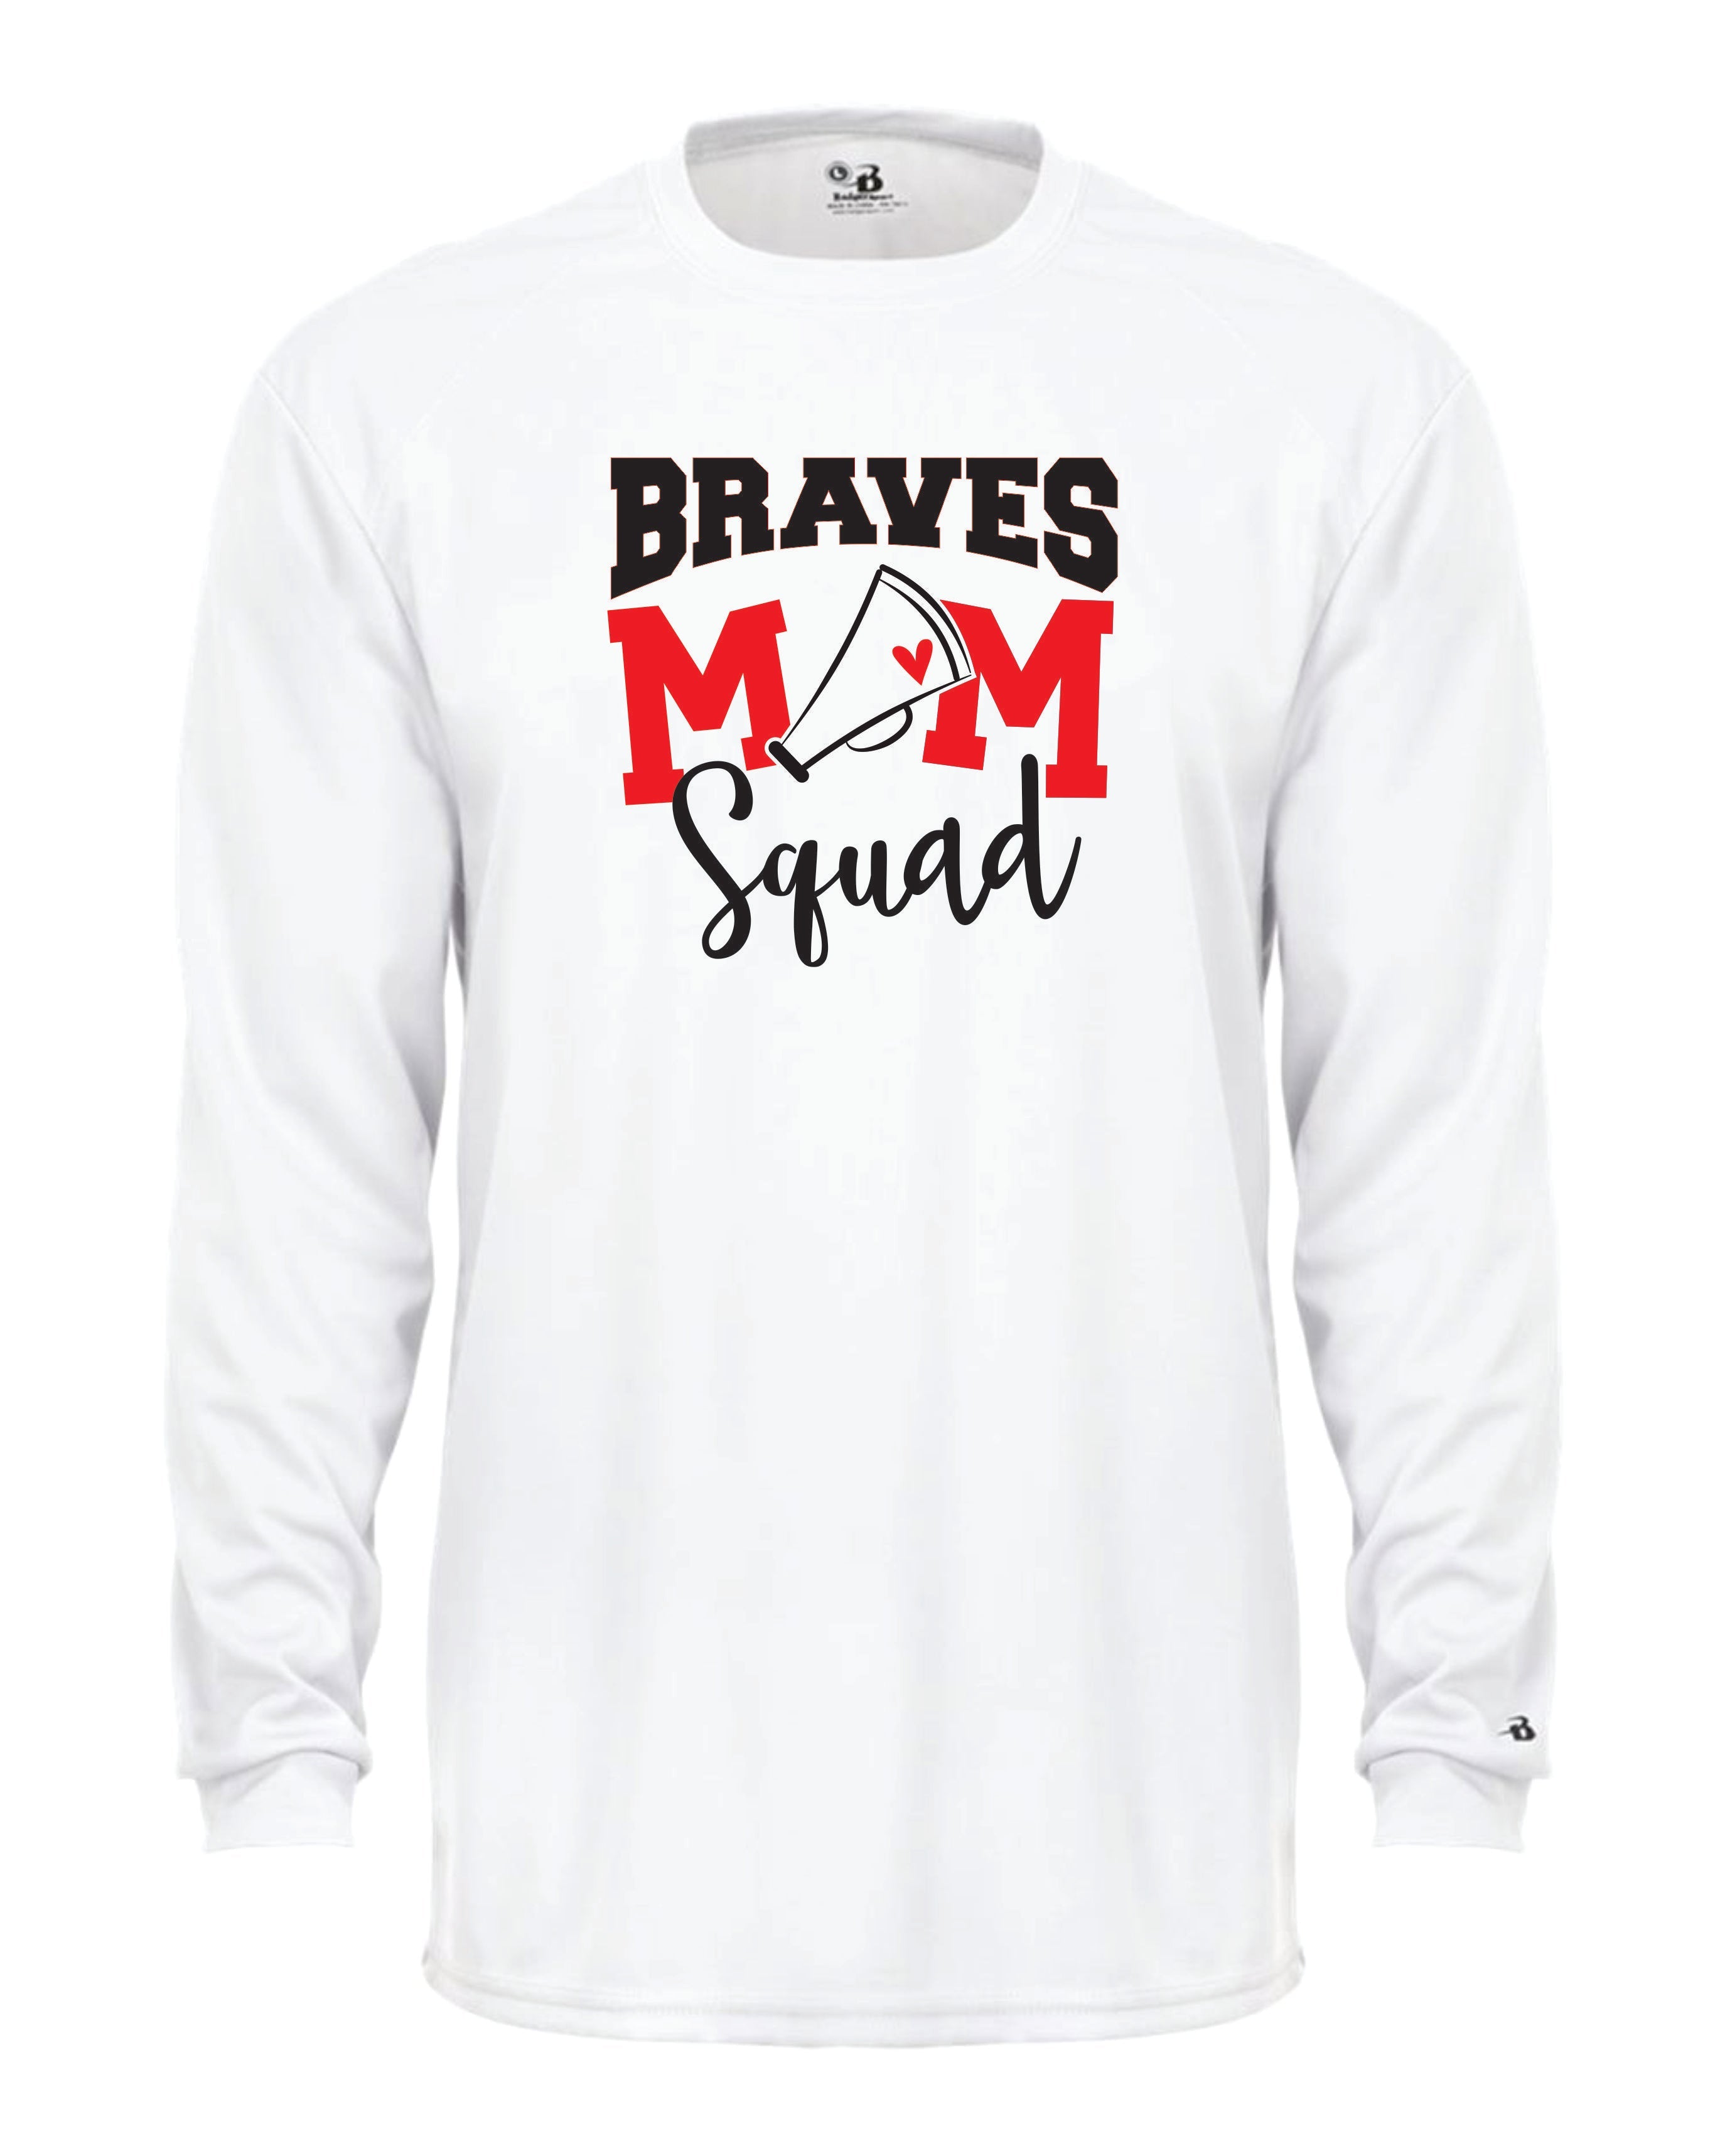 Mechanicsville Braves Long Sleeve Badger Dri Fit WOMEN Shirt-CHEER MOM SQUAD